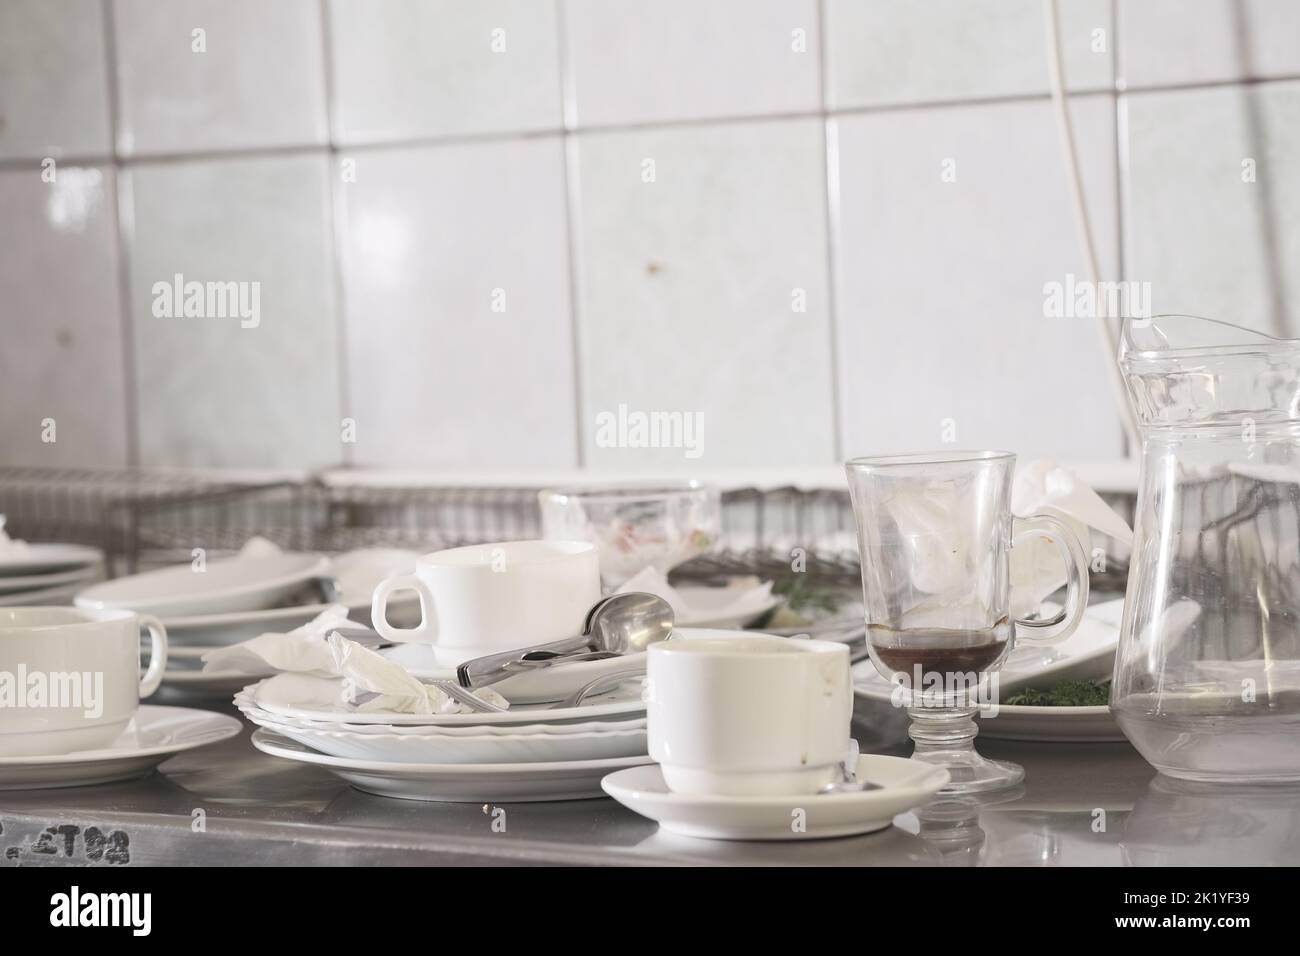 Dirty dishware on metal table. Stock Photo